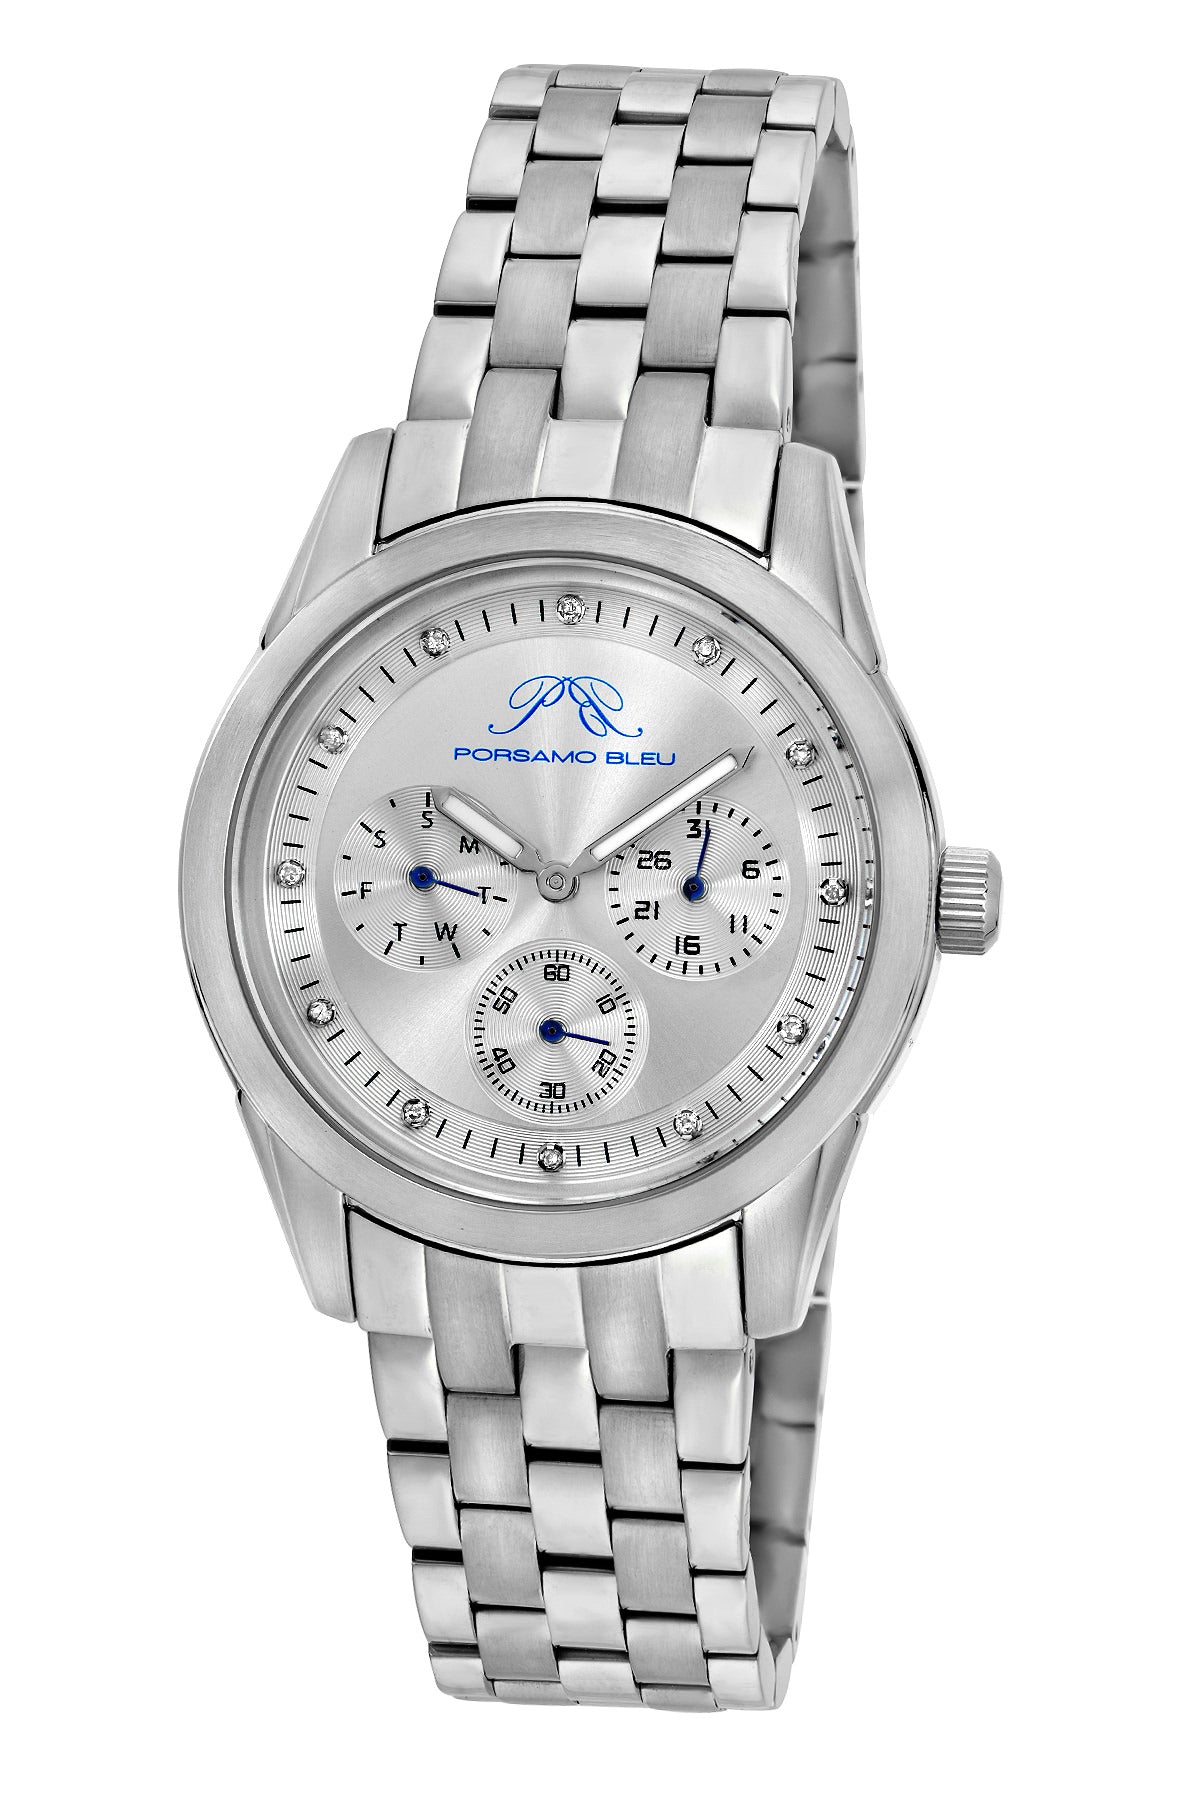 Porsamo Bleu Diana Luxury Diamond Women's Stainless Steel Watch, Silver 741ADIS